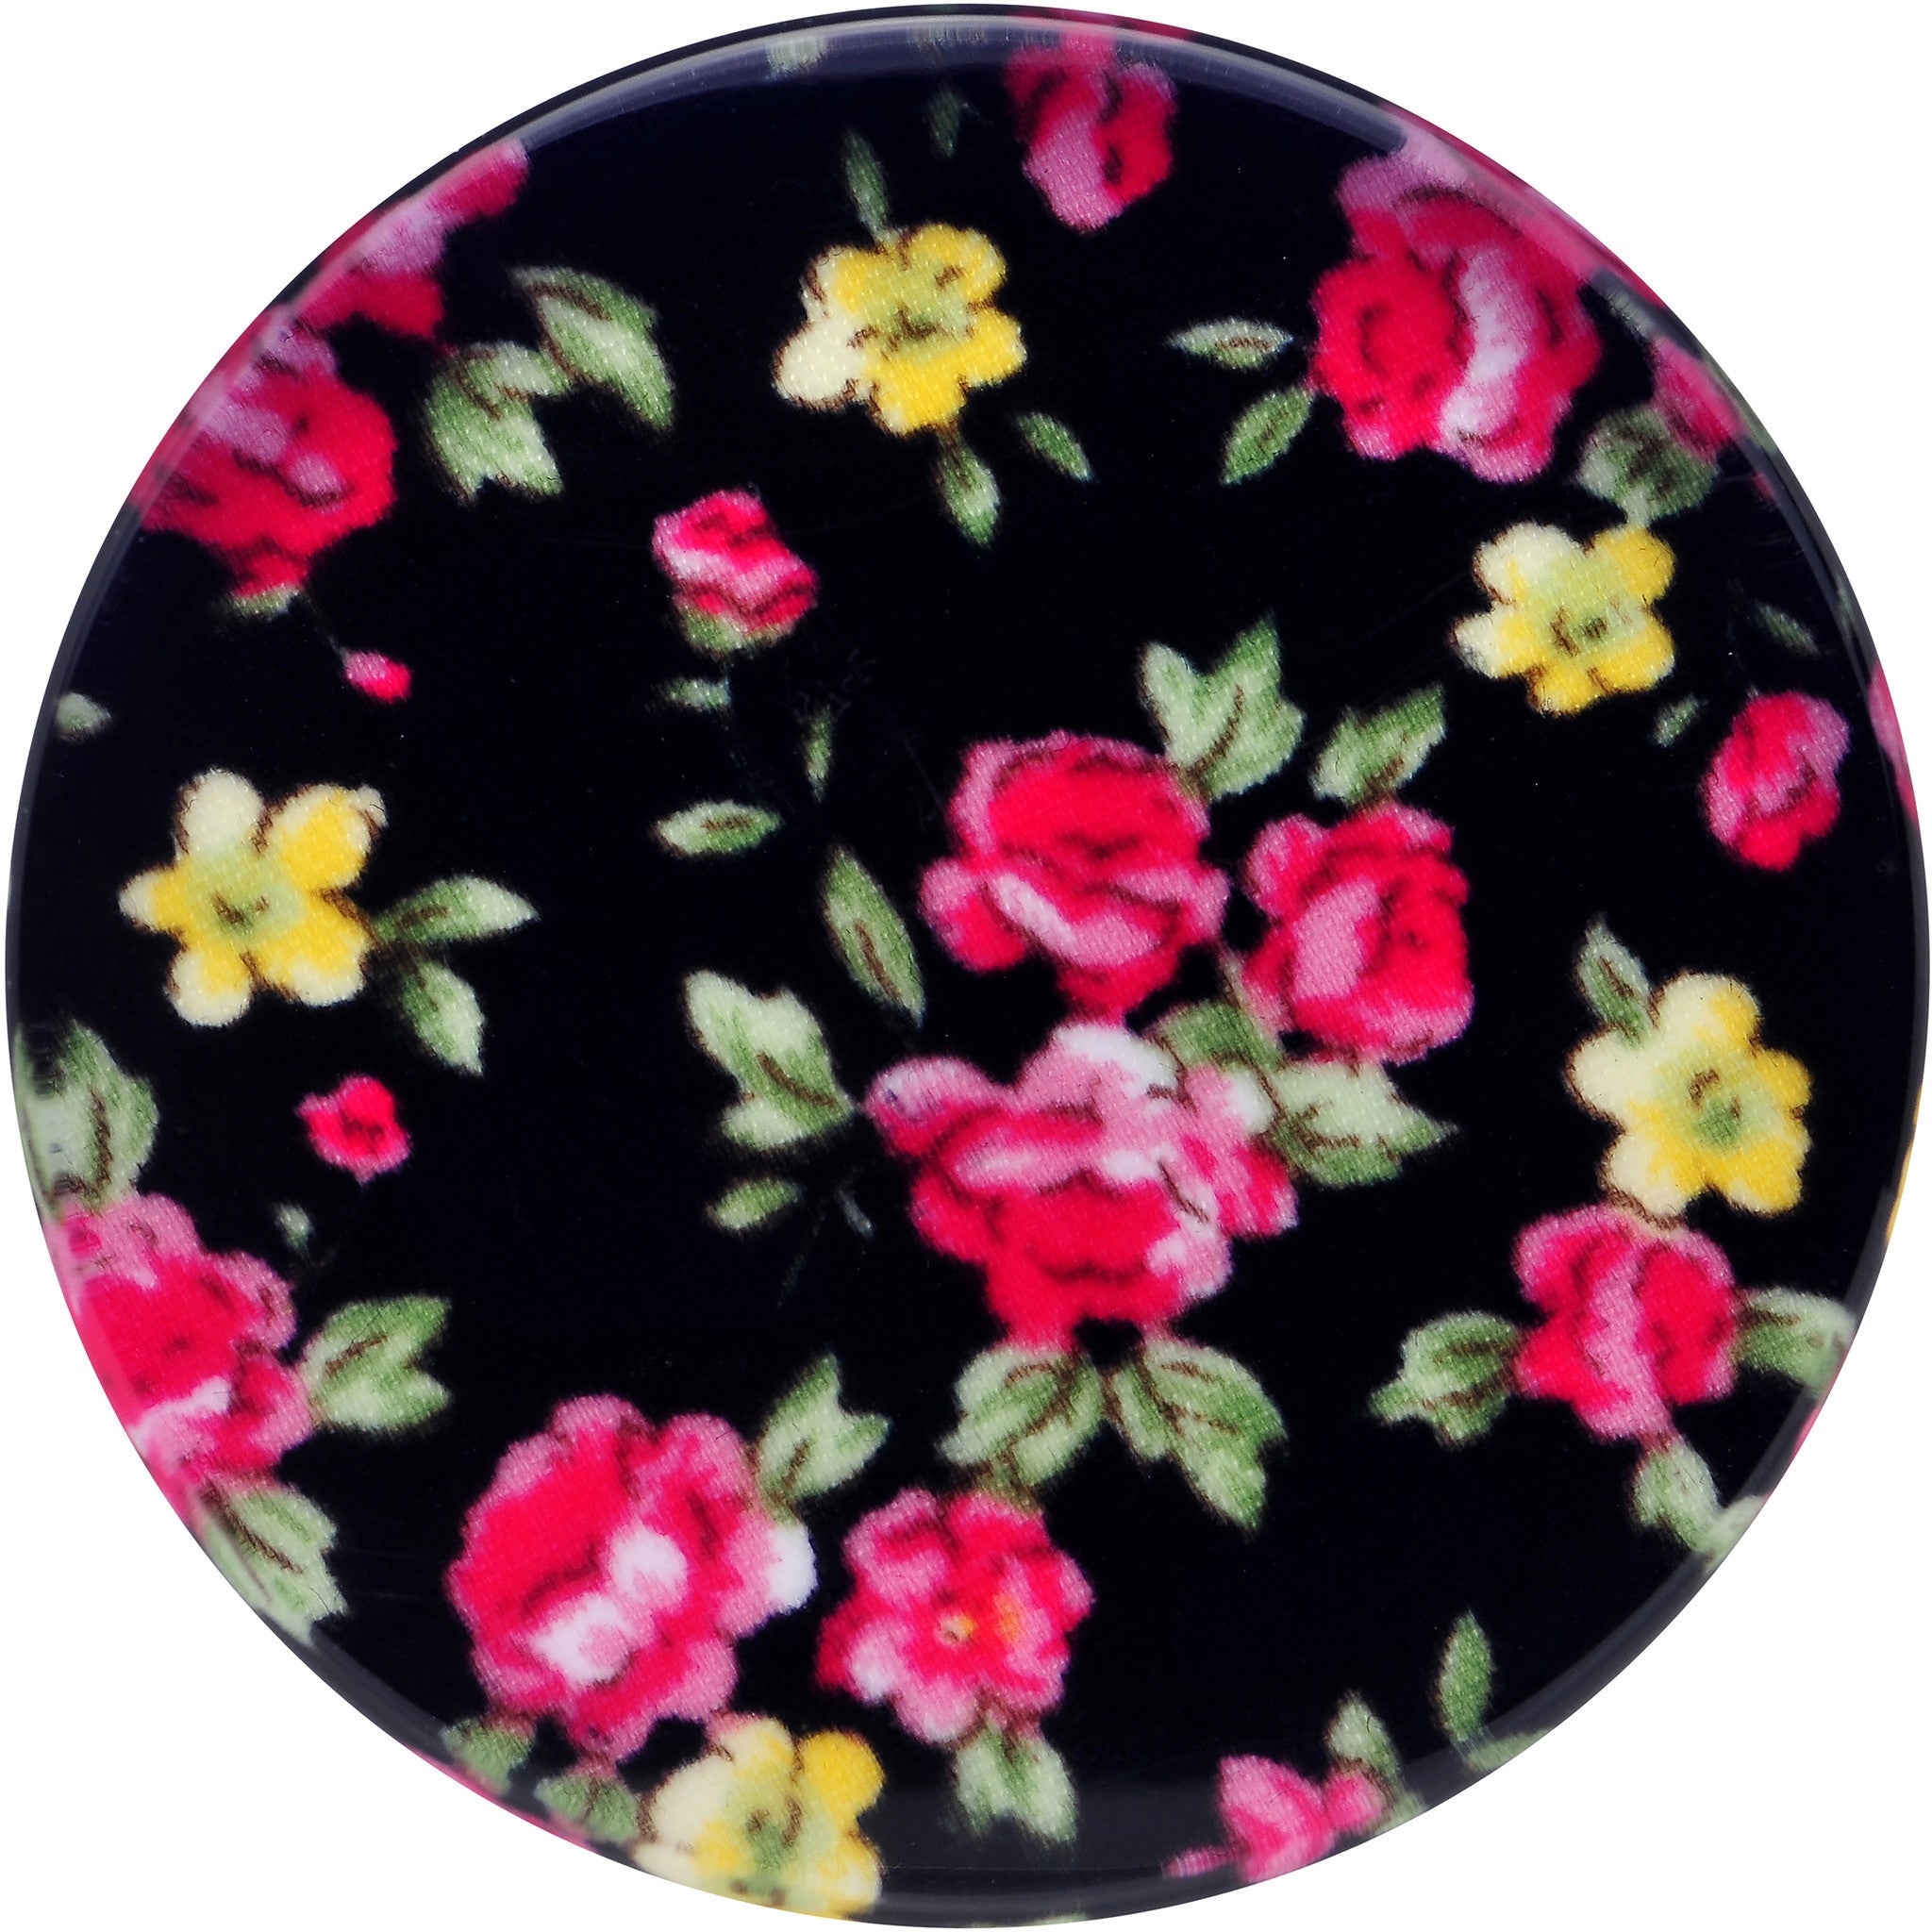 40mm Acrylic Black Multicolored Old Fashioned Flowers Saddle Plug